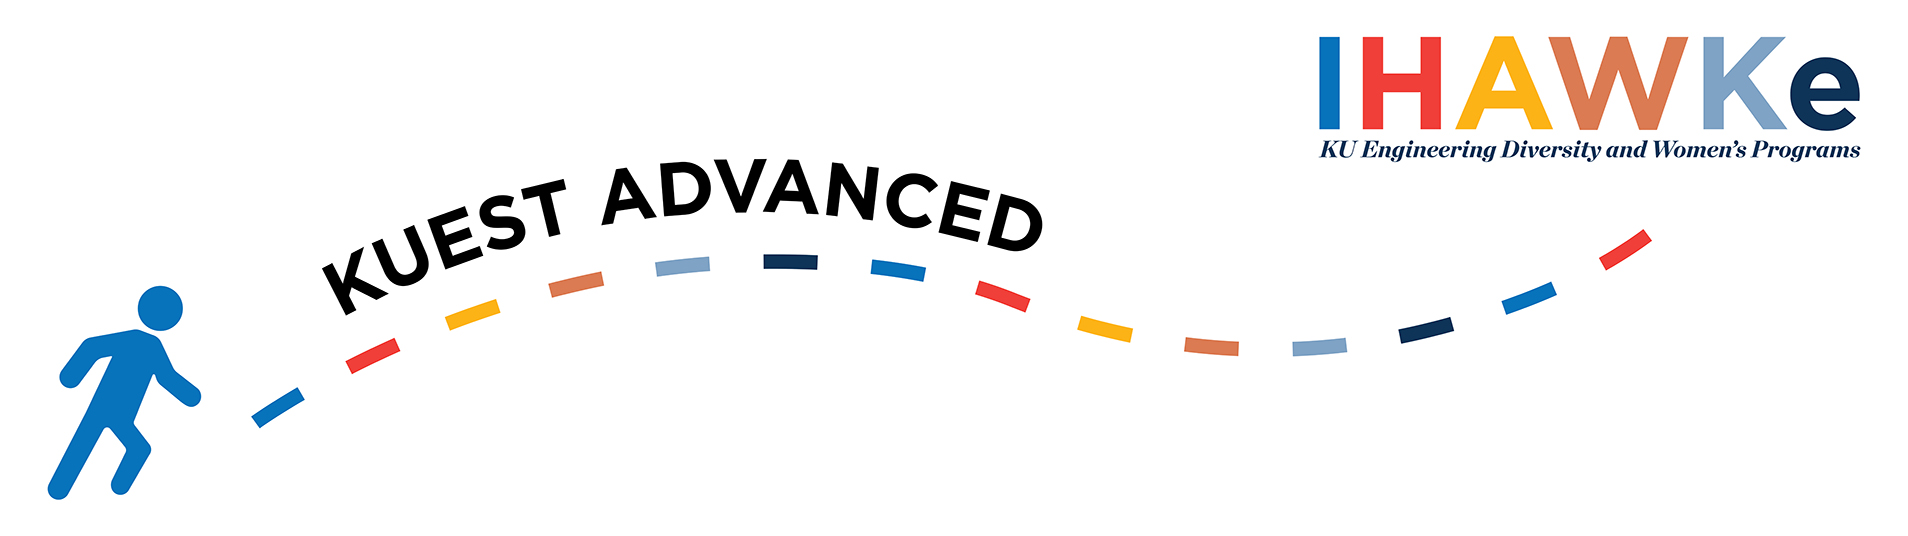 KUEST Advanced logo with a person traversing a path of KUEST advanced to IHAWKe